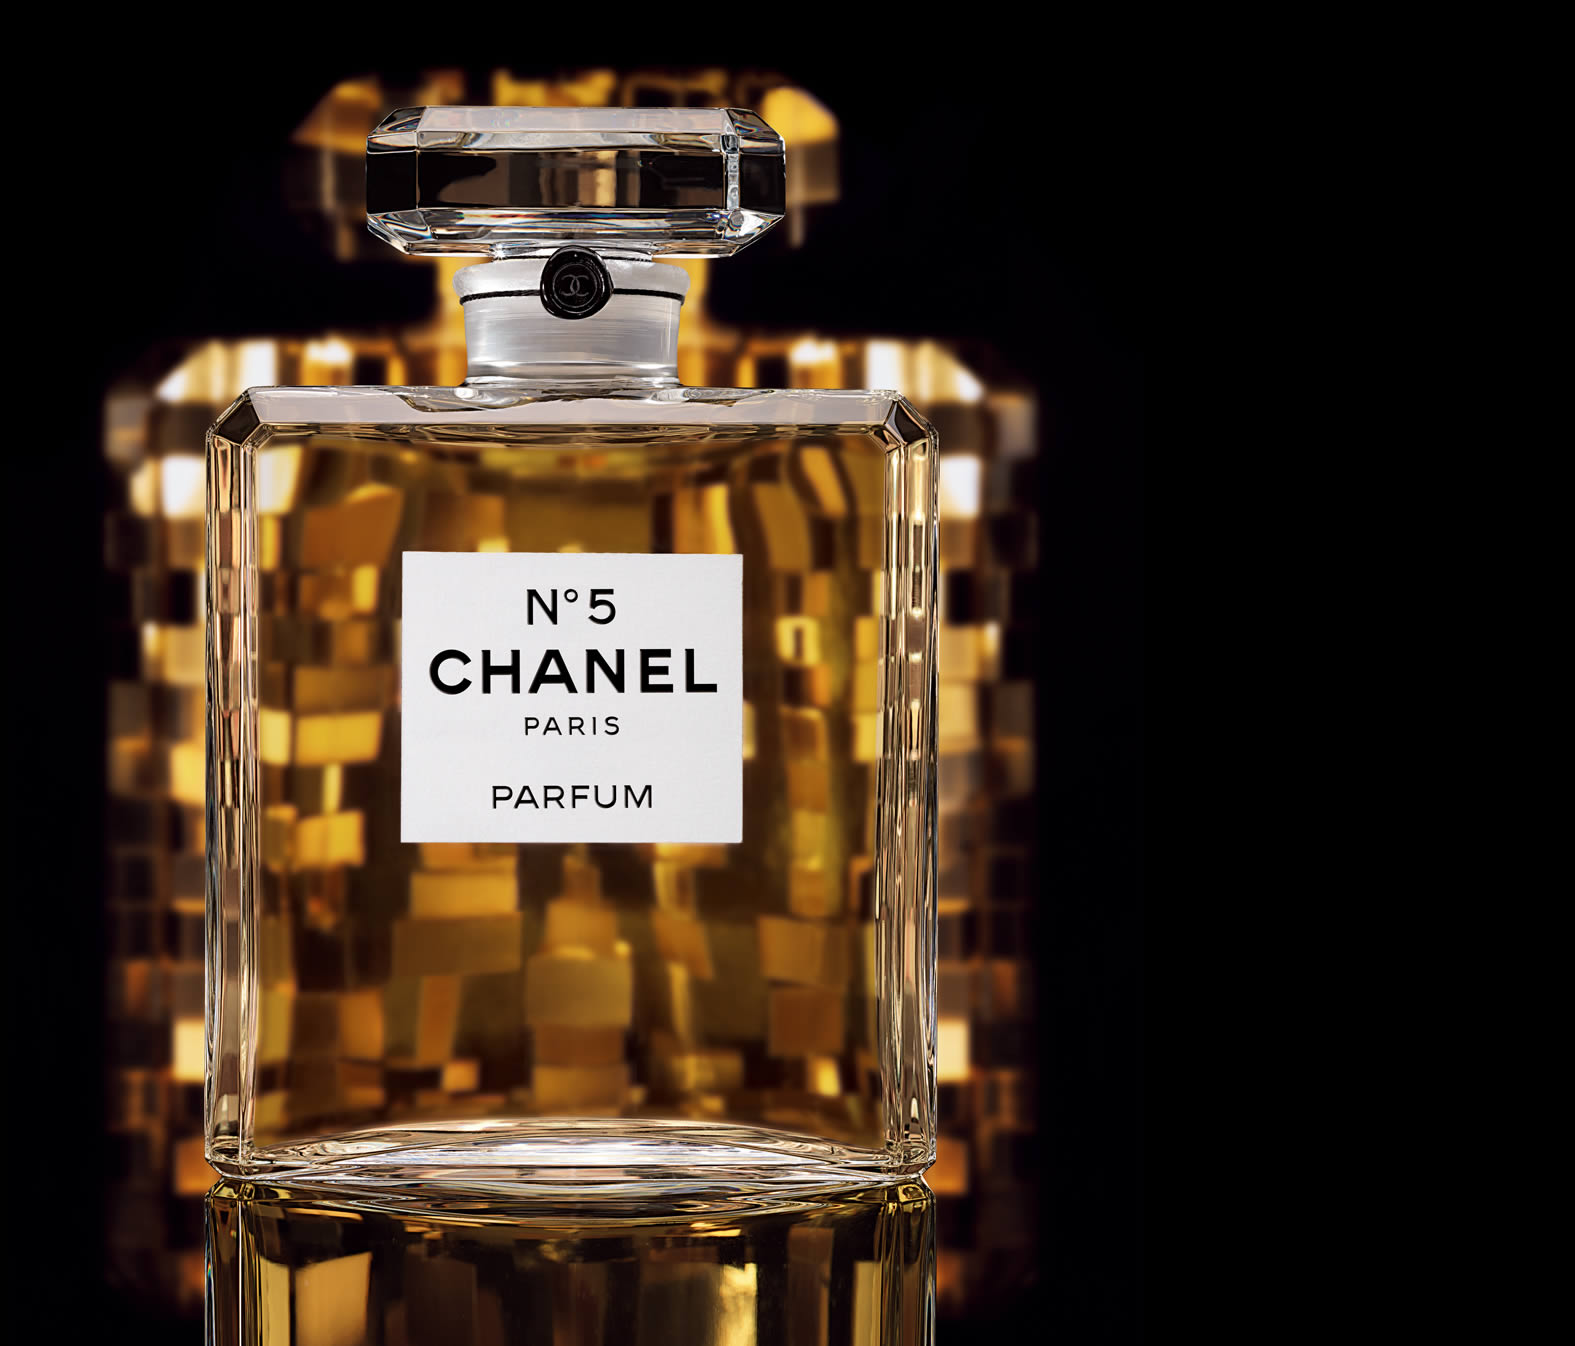 Chanel Paris New No. 5 Designer Perfumes 5pc. Lot